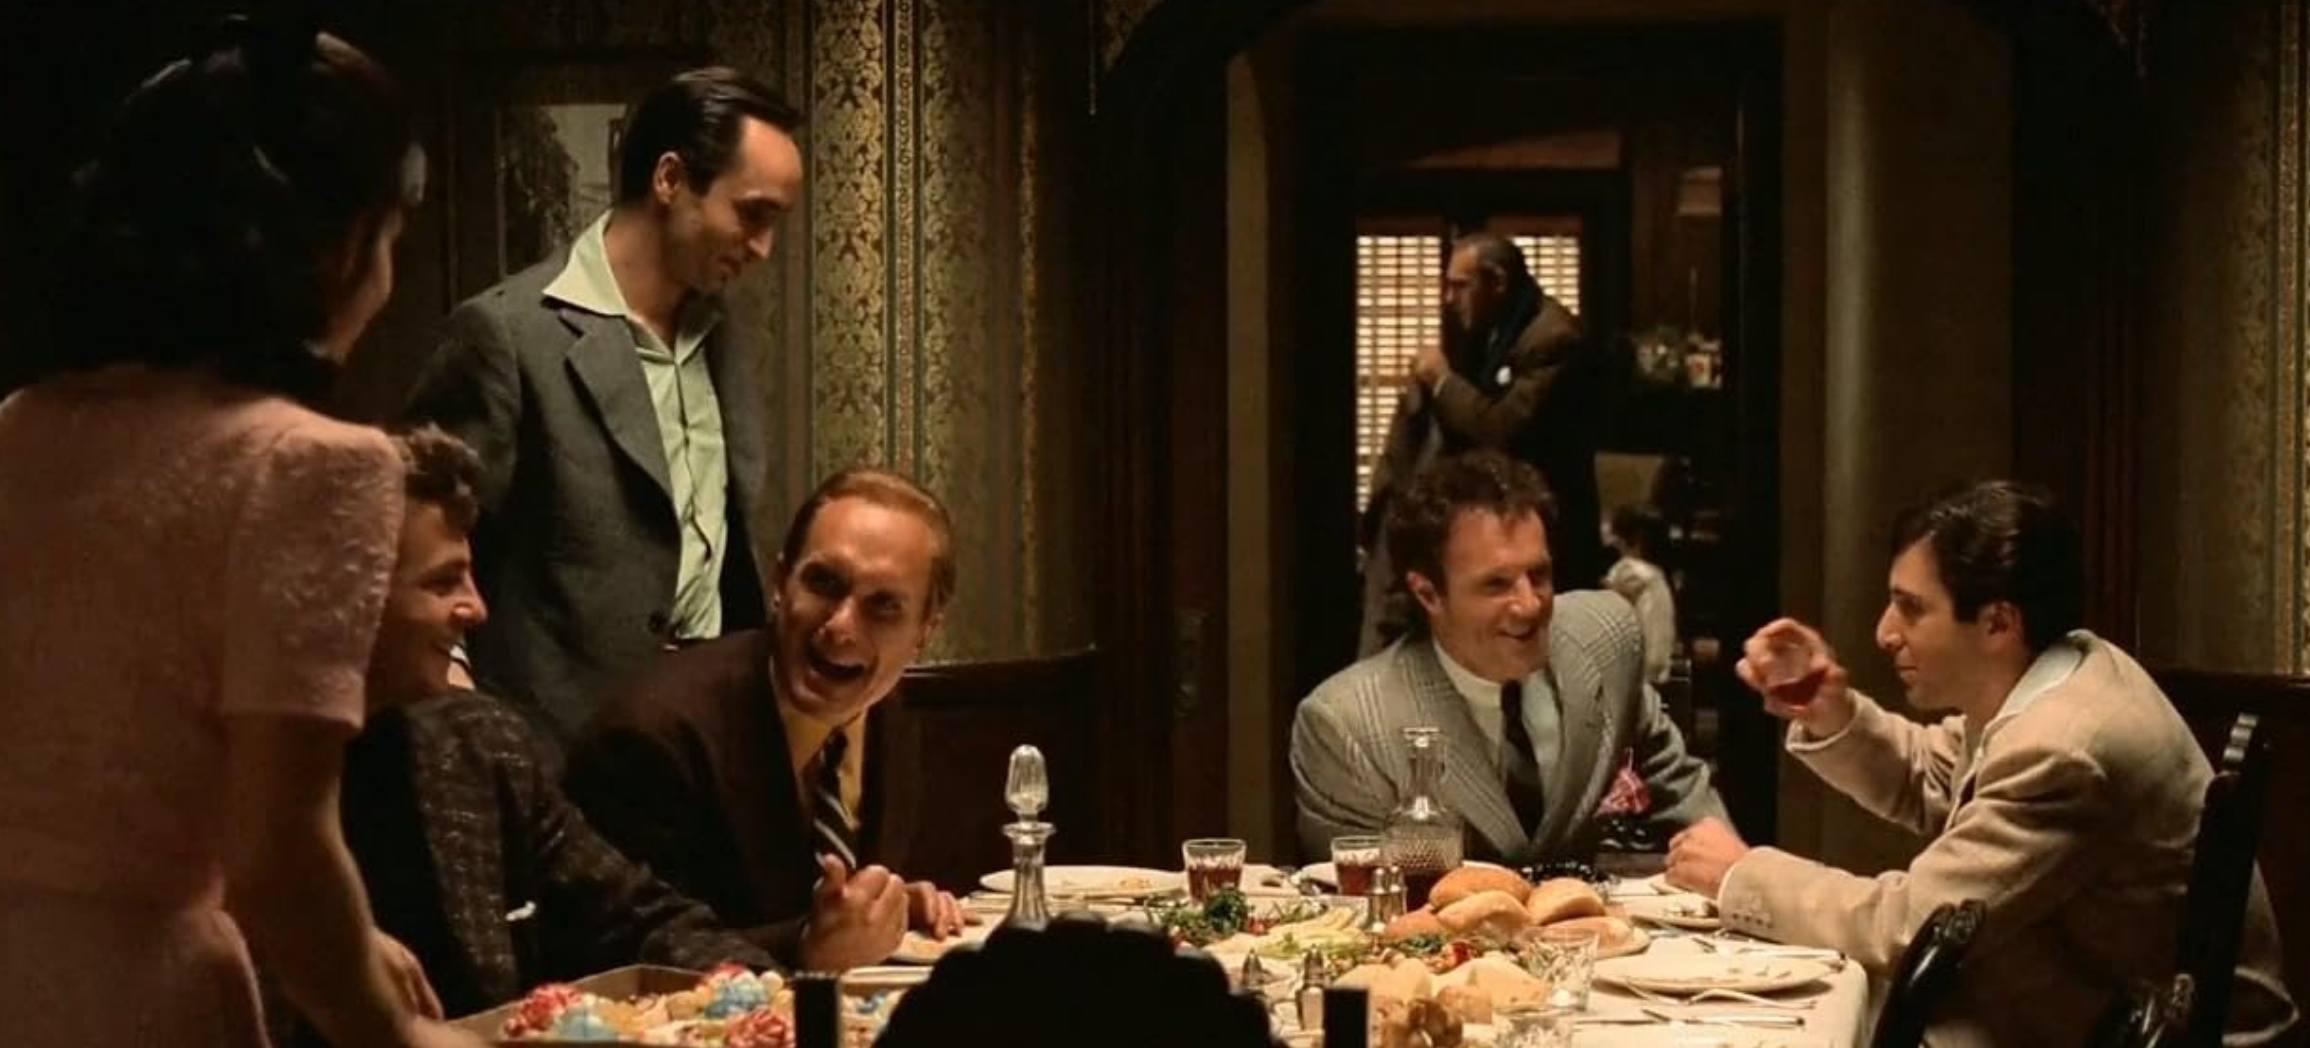 The Godfather II adalah satu dari 5 film top rating imdb yang bakal dikalahin sama Dune Part 2